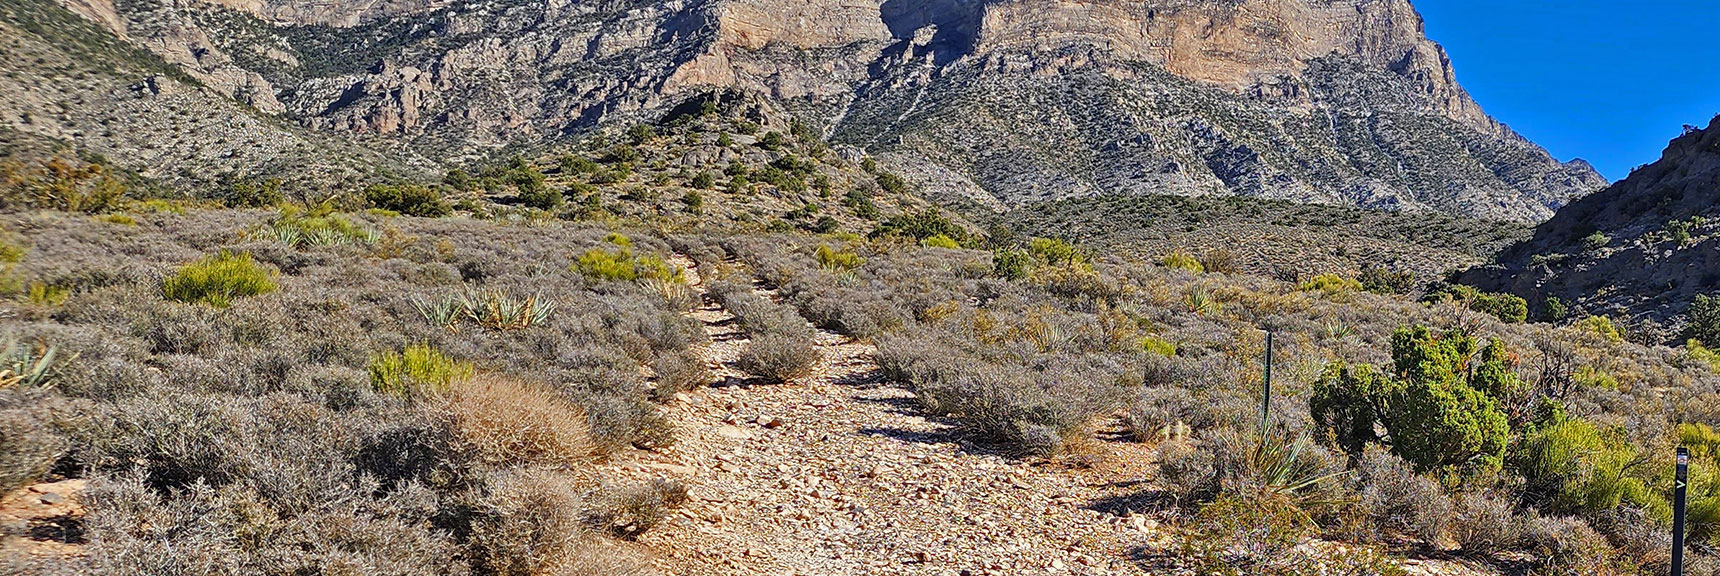 Another Historic Road Splits from Keystone Thrust Trail Toward Canyon | Historic Roads in Red Rock Canyon, Nevada | David Smith | LasVegasAreaTrails.com